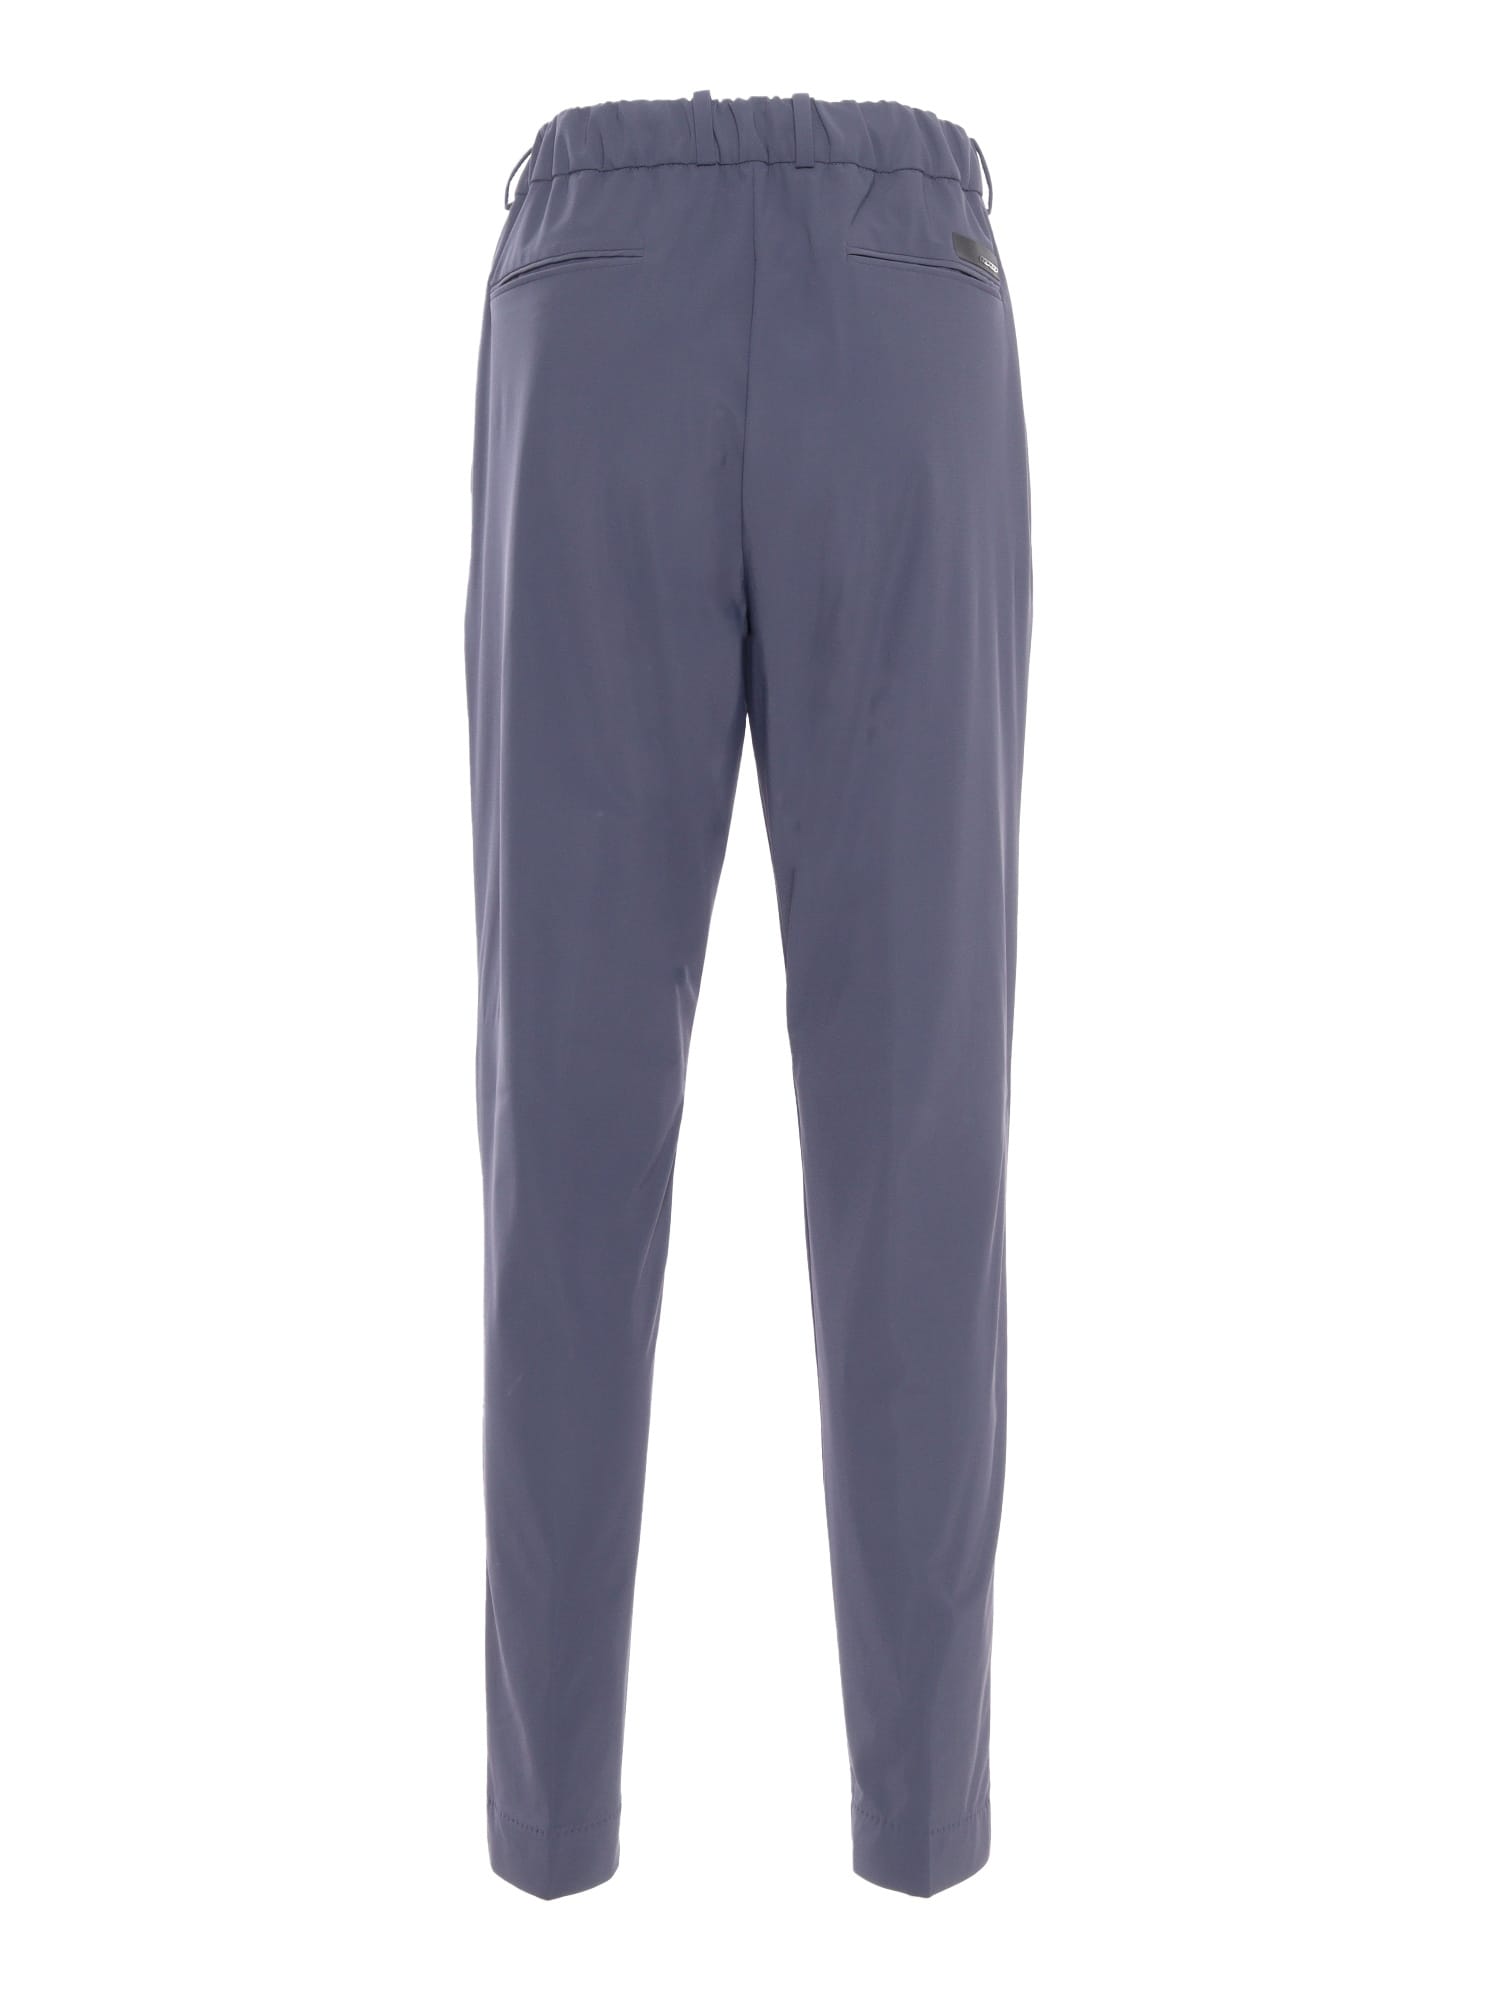 Shop Rrd - Roberto Ricci Design Dark Grey Chino Pants